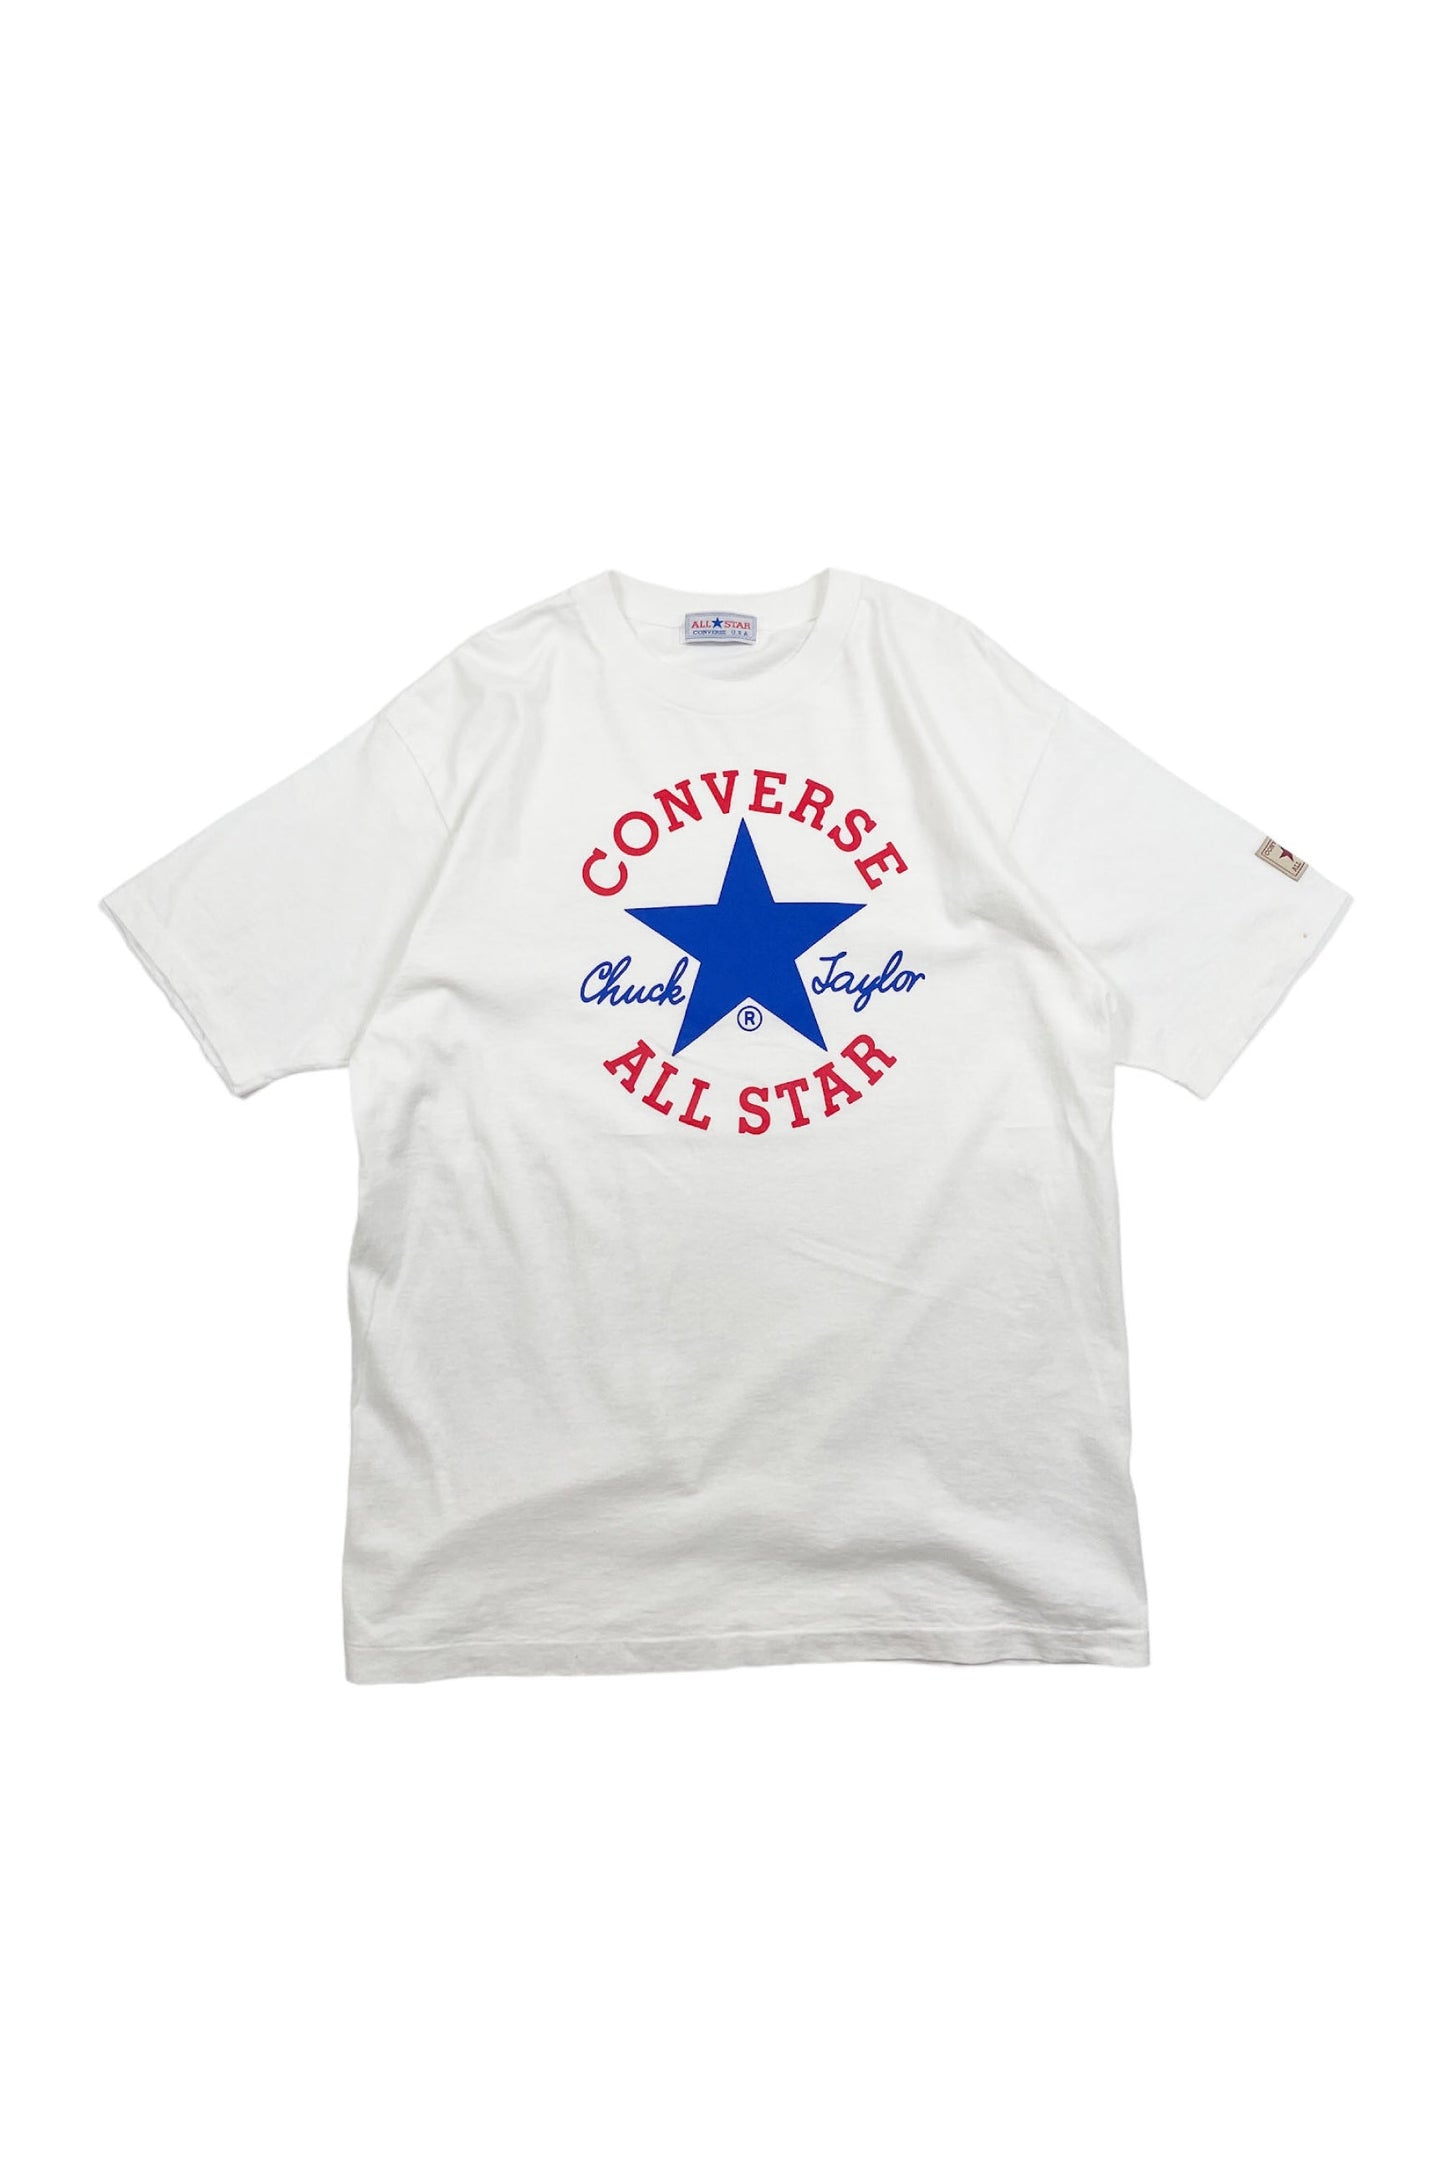 ALL STAR CONVERSE T-shirt